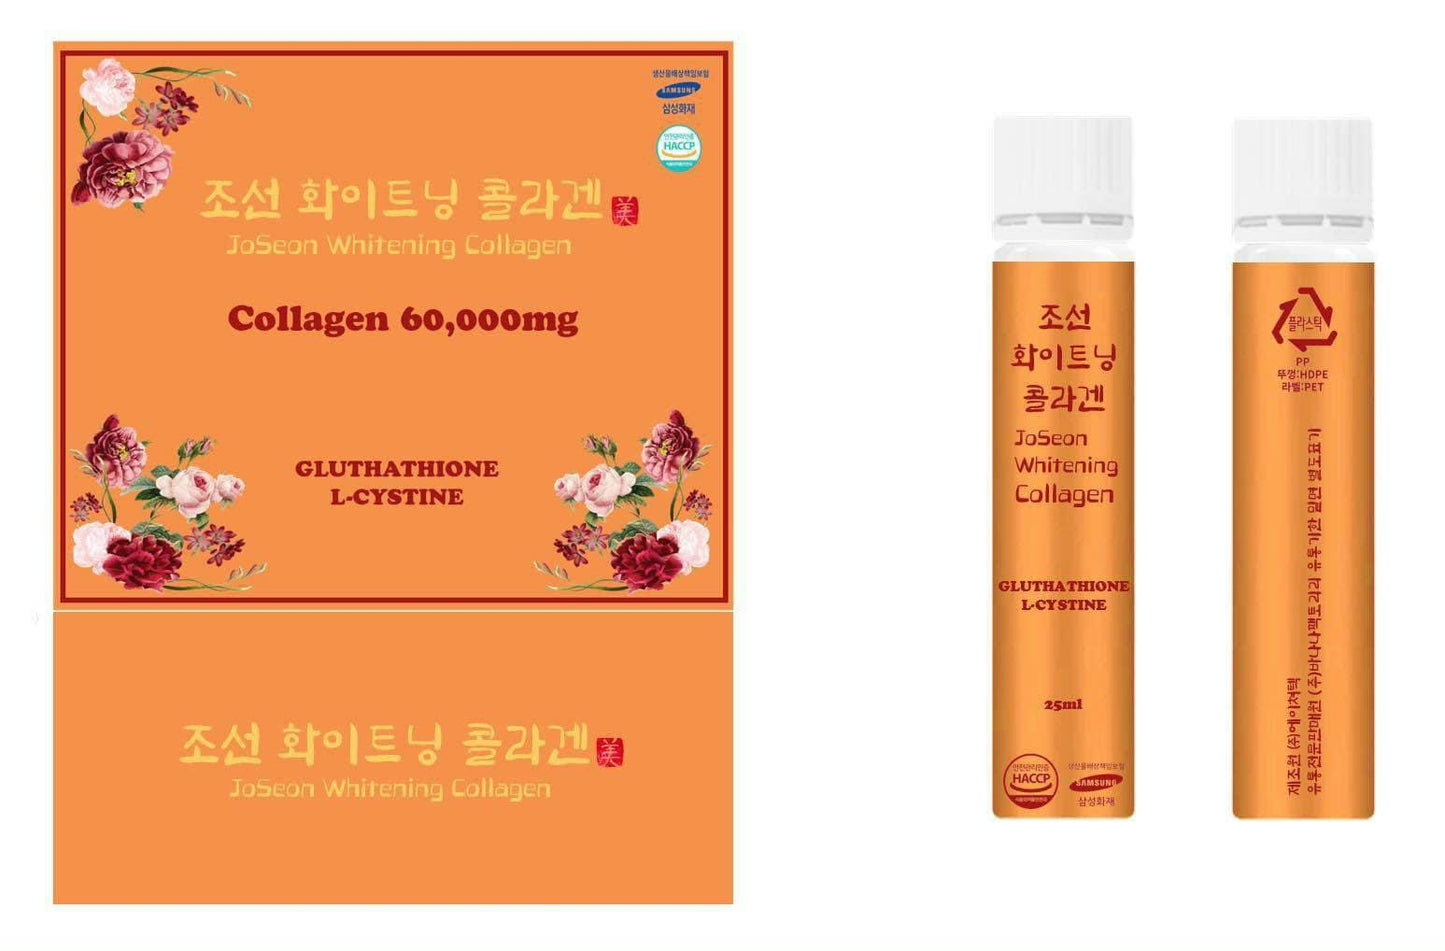 Deal 3 hop collagen Jo Seon